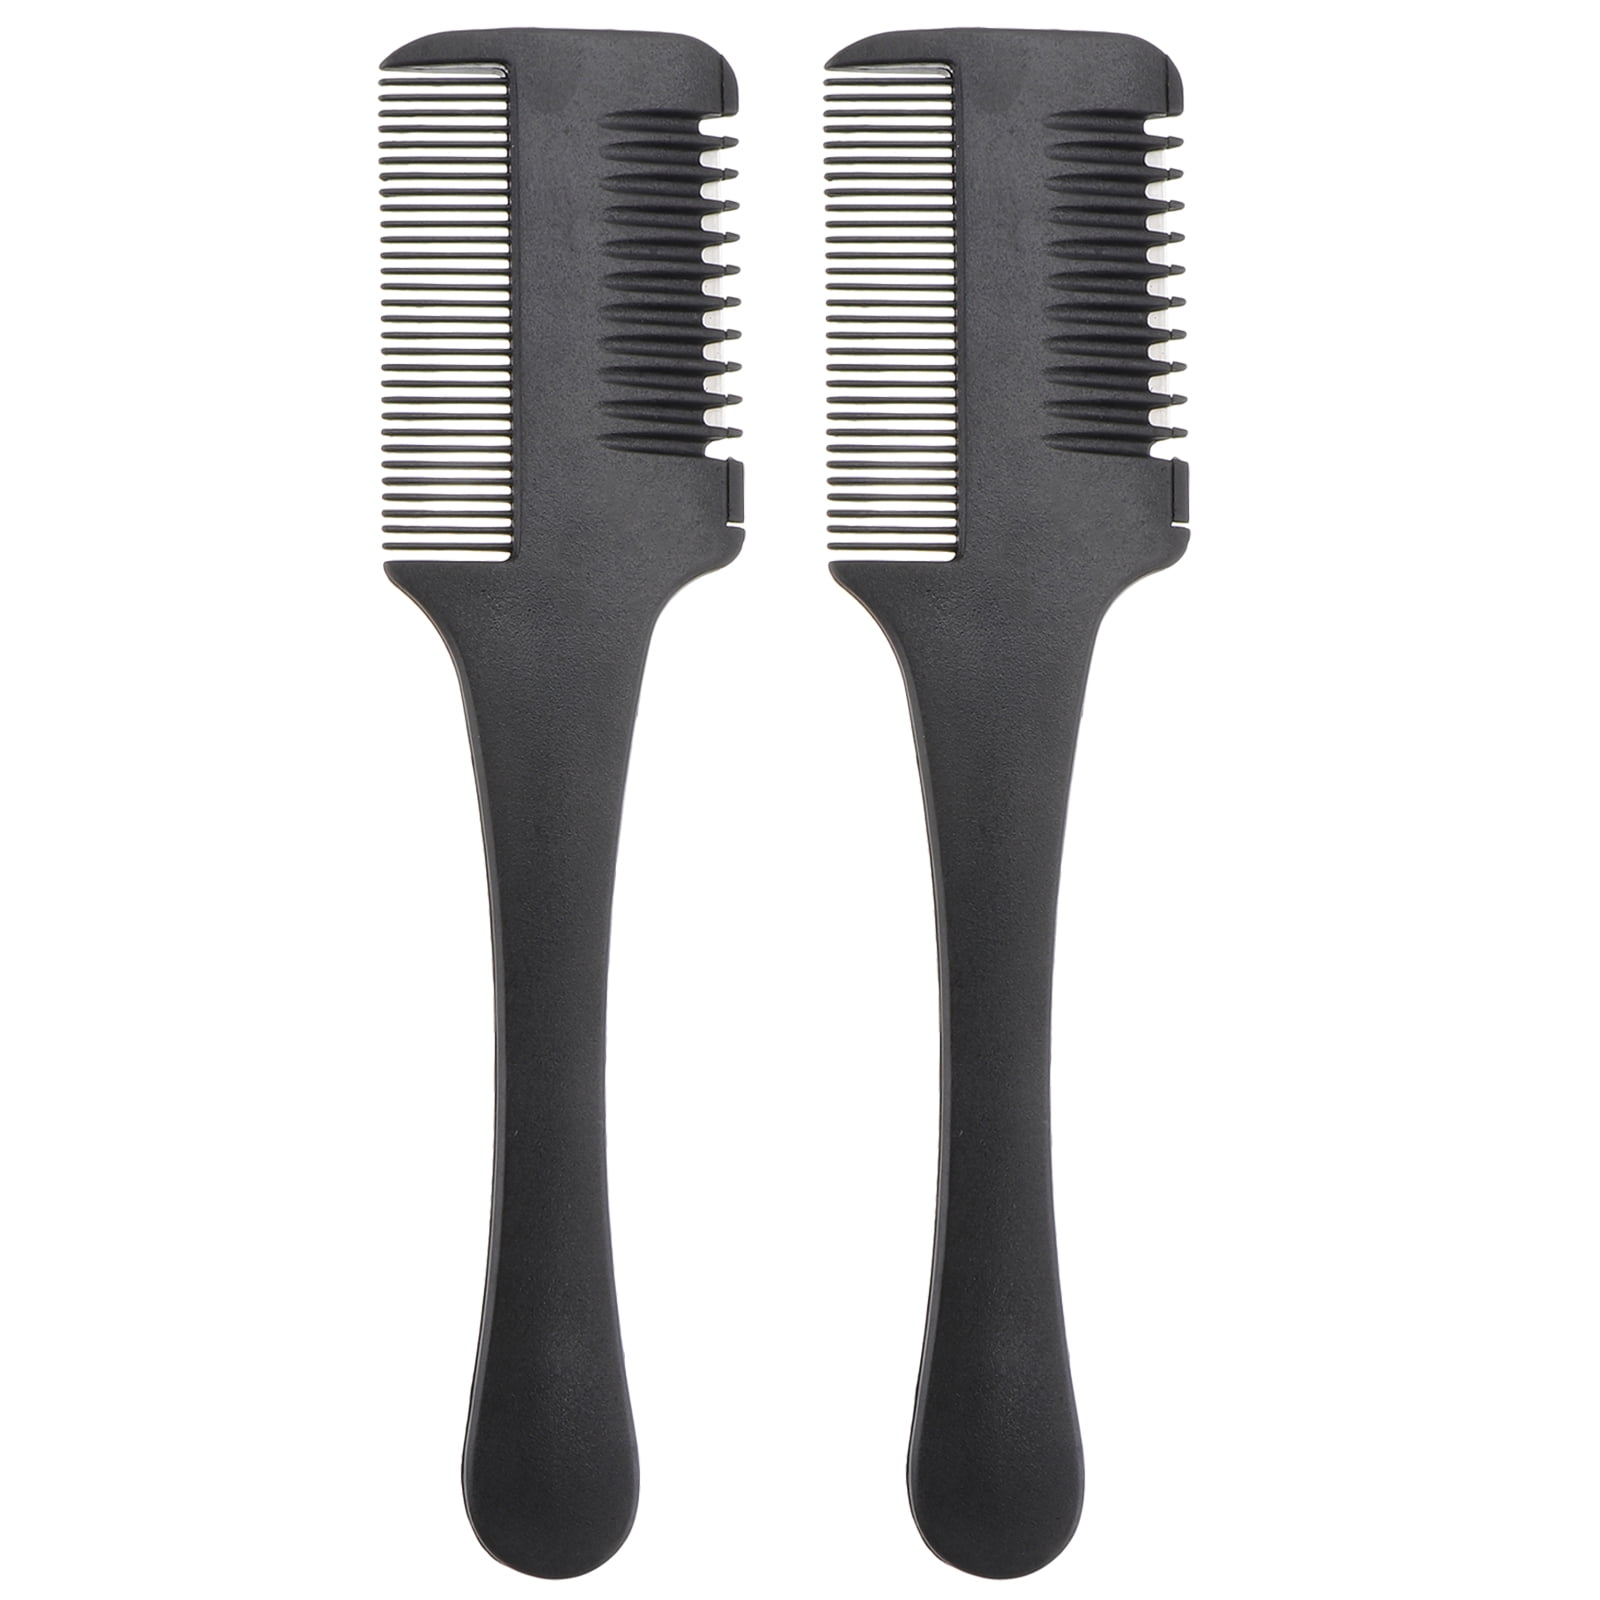 BLACK EGG Soft Hair Brush Hair Comb for Thin and Fine Hair